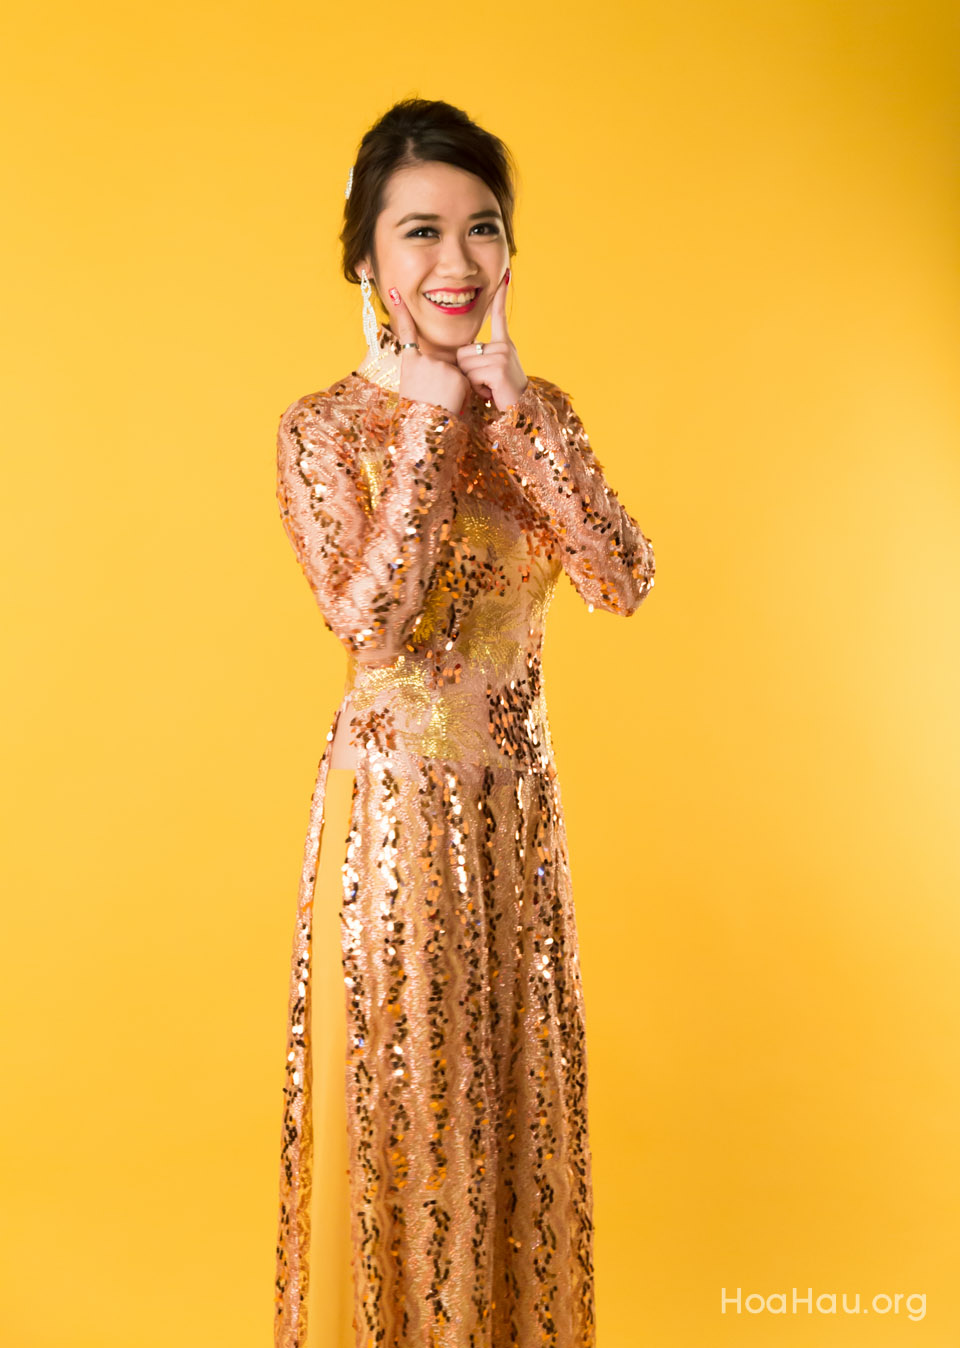 Calendar 2014 Photoshoot - Miss Vietnam of Northern California 2014 - Image 141